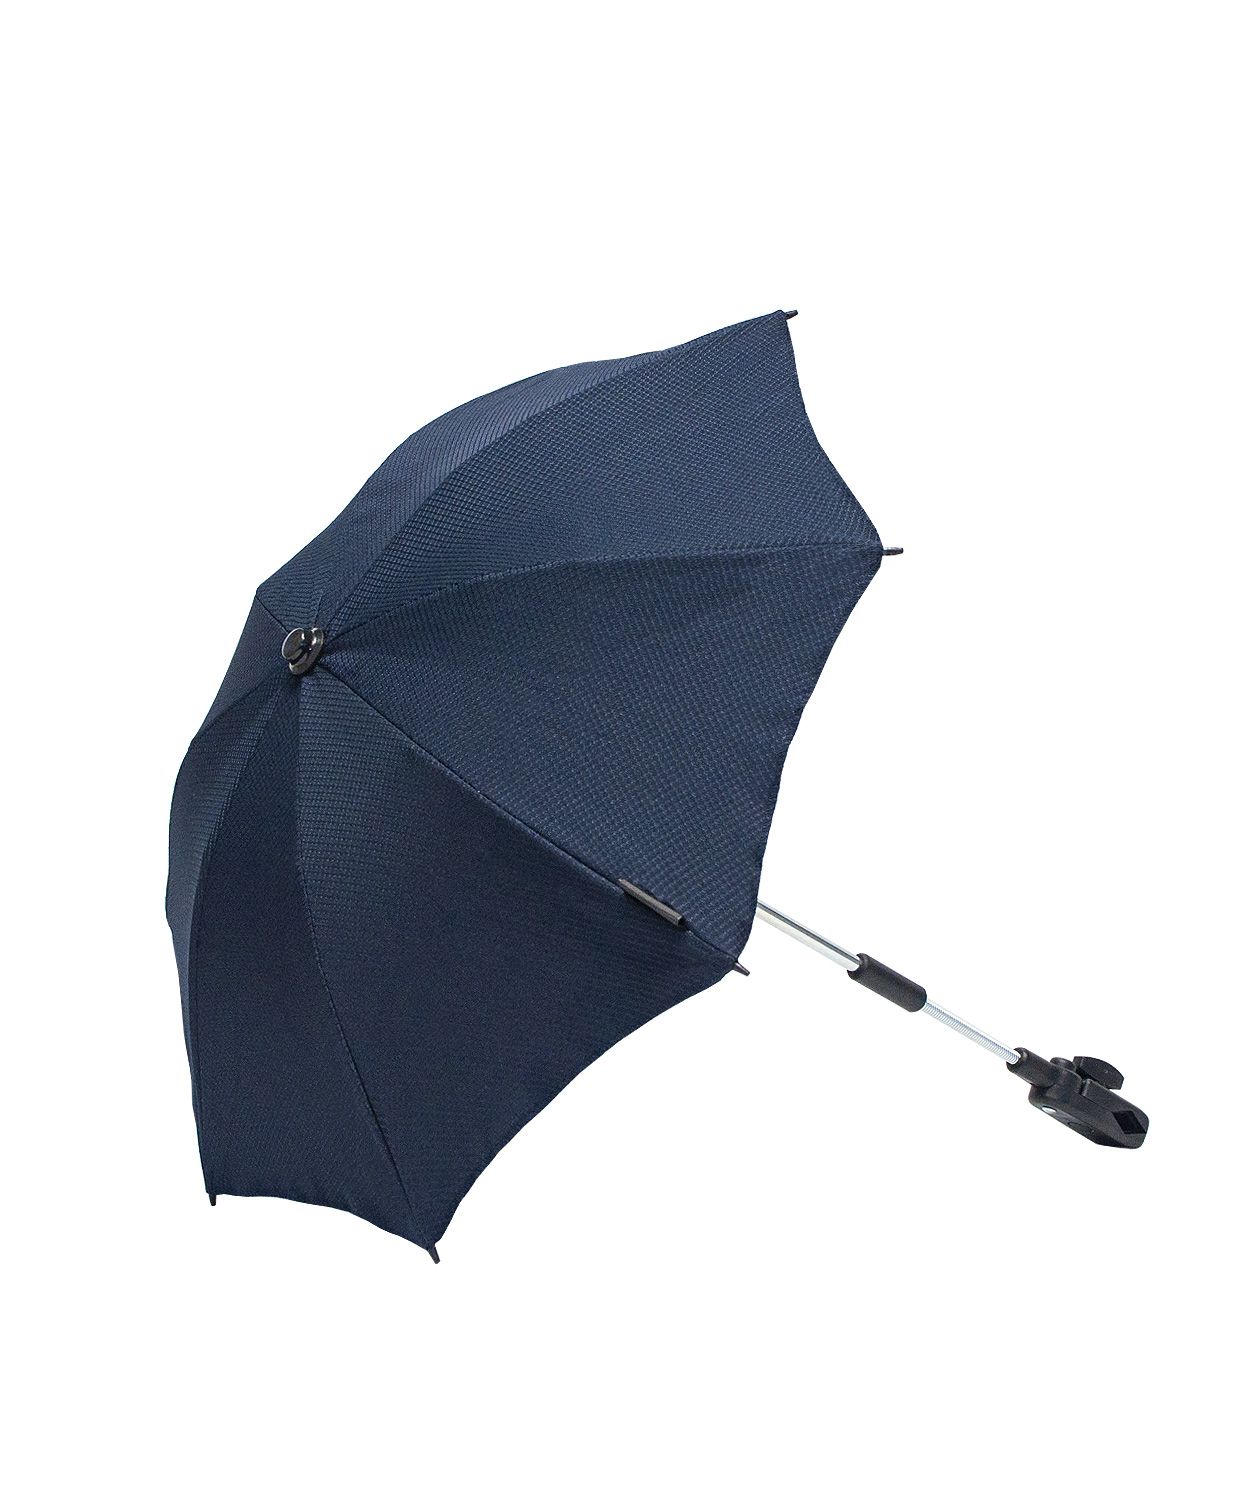 navy parasol for pram